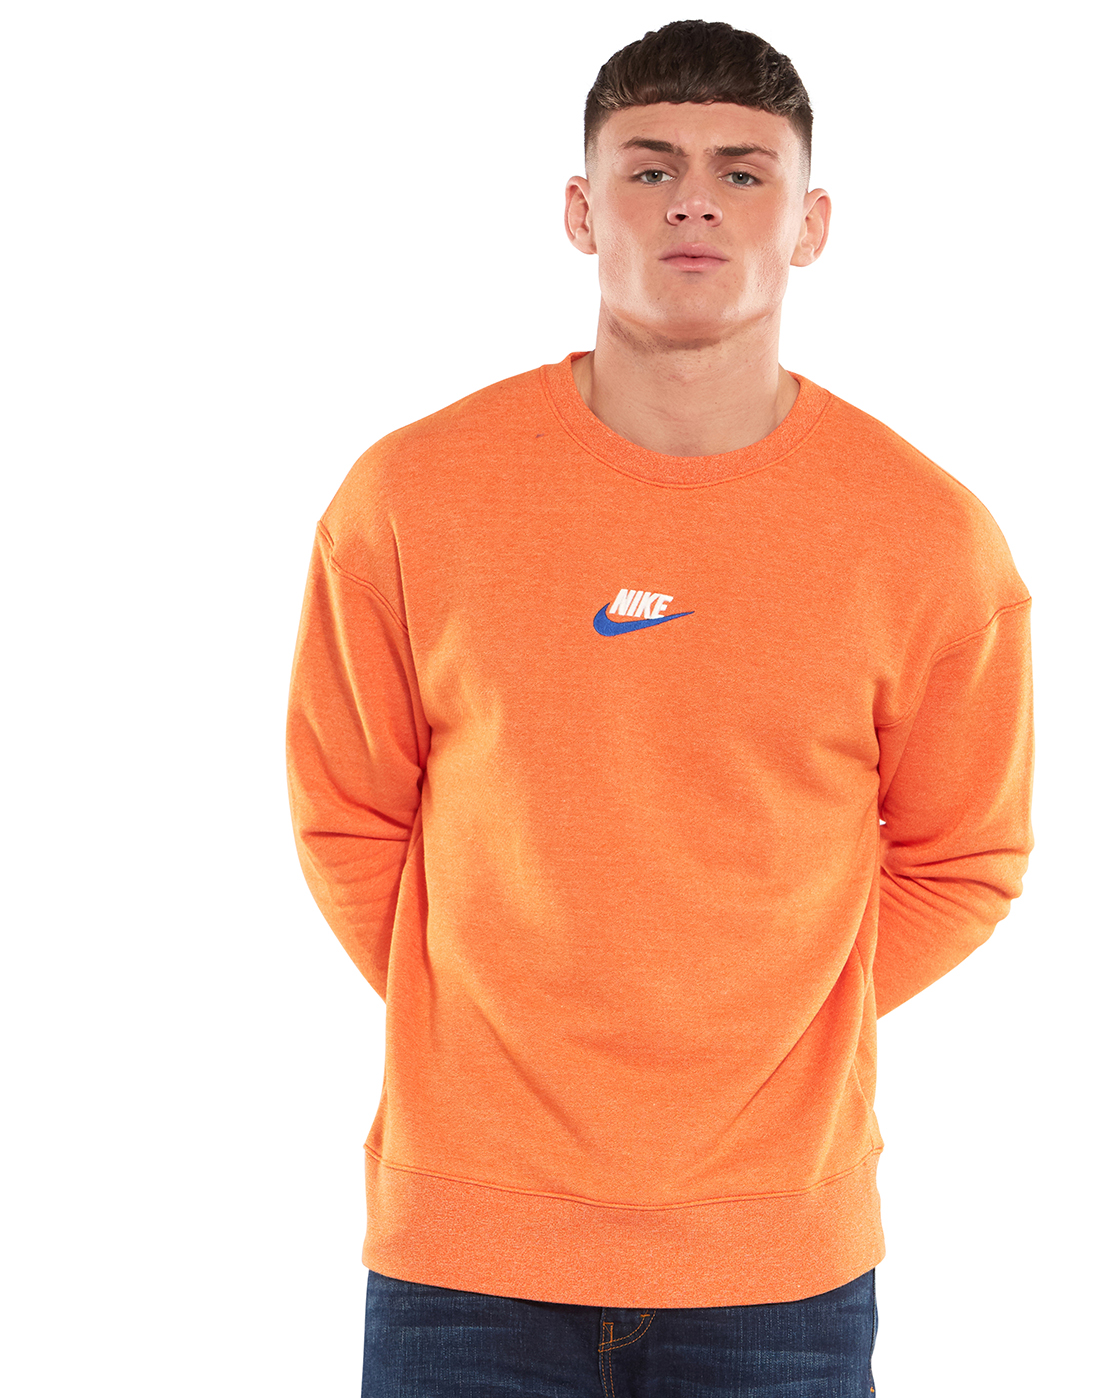 Nike Mens Heritage Crew Neck Sweatshirt - Orange | Life Style Sports EU